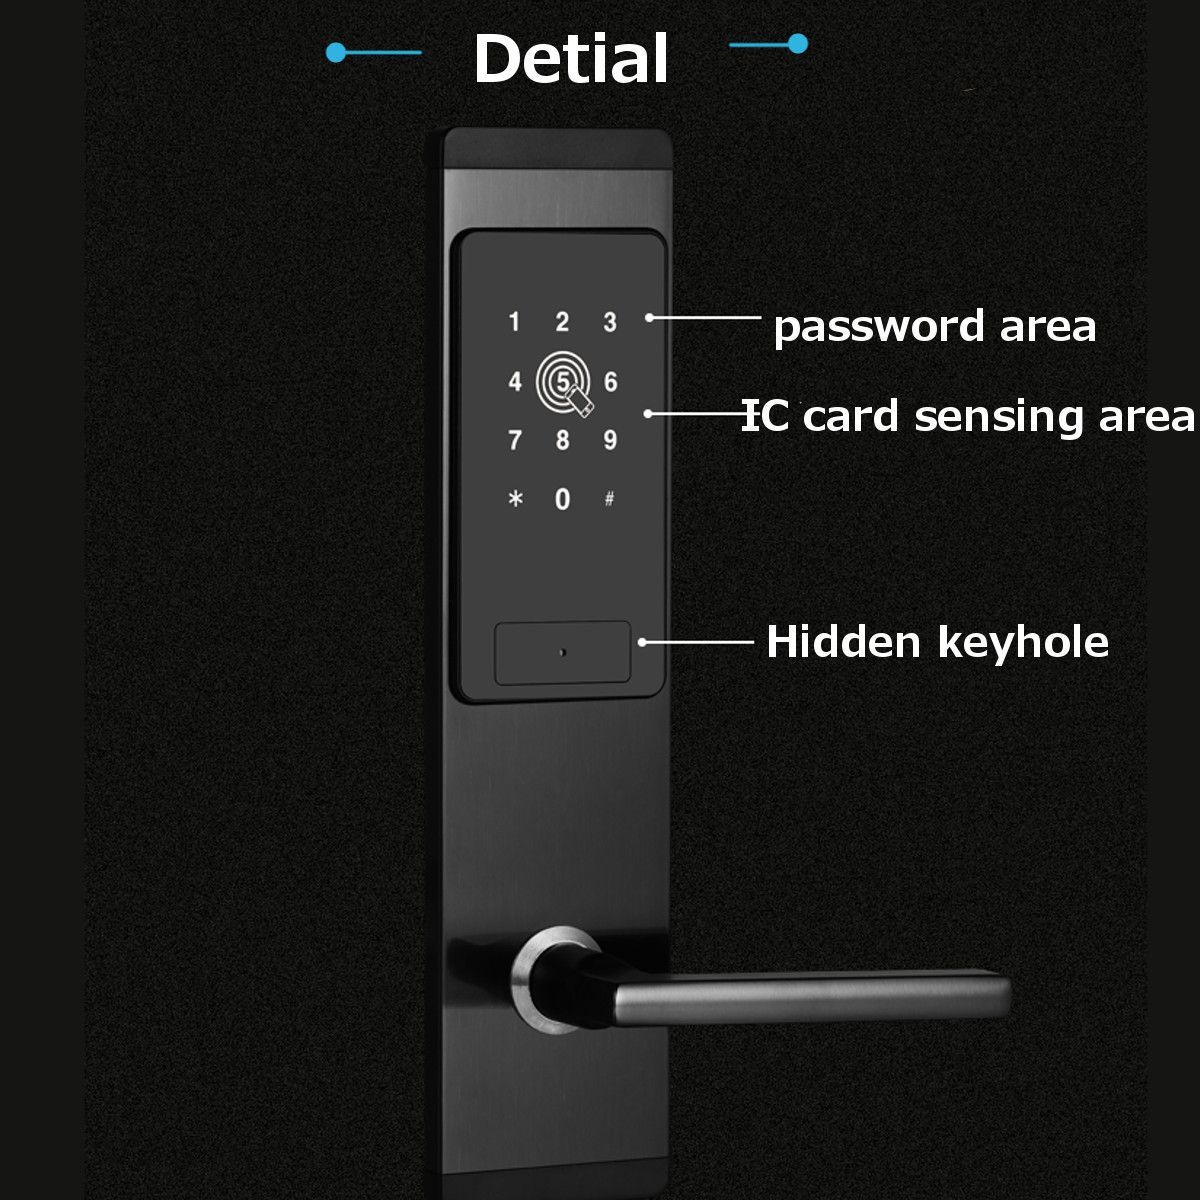 Smart-Electronic-Fingerprint-Lock-Smart-Home-Electronics-Door-Lock-Large-Indoor-Remote-Control-By-ke-1632853